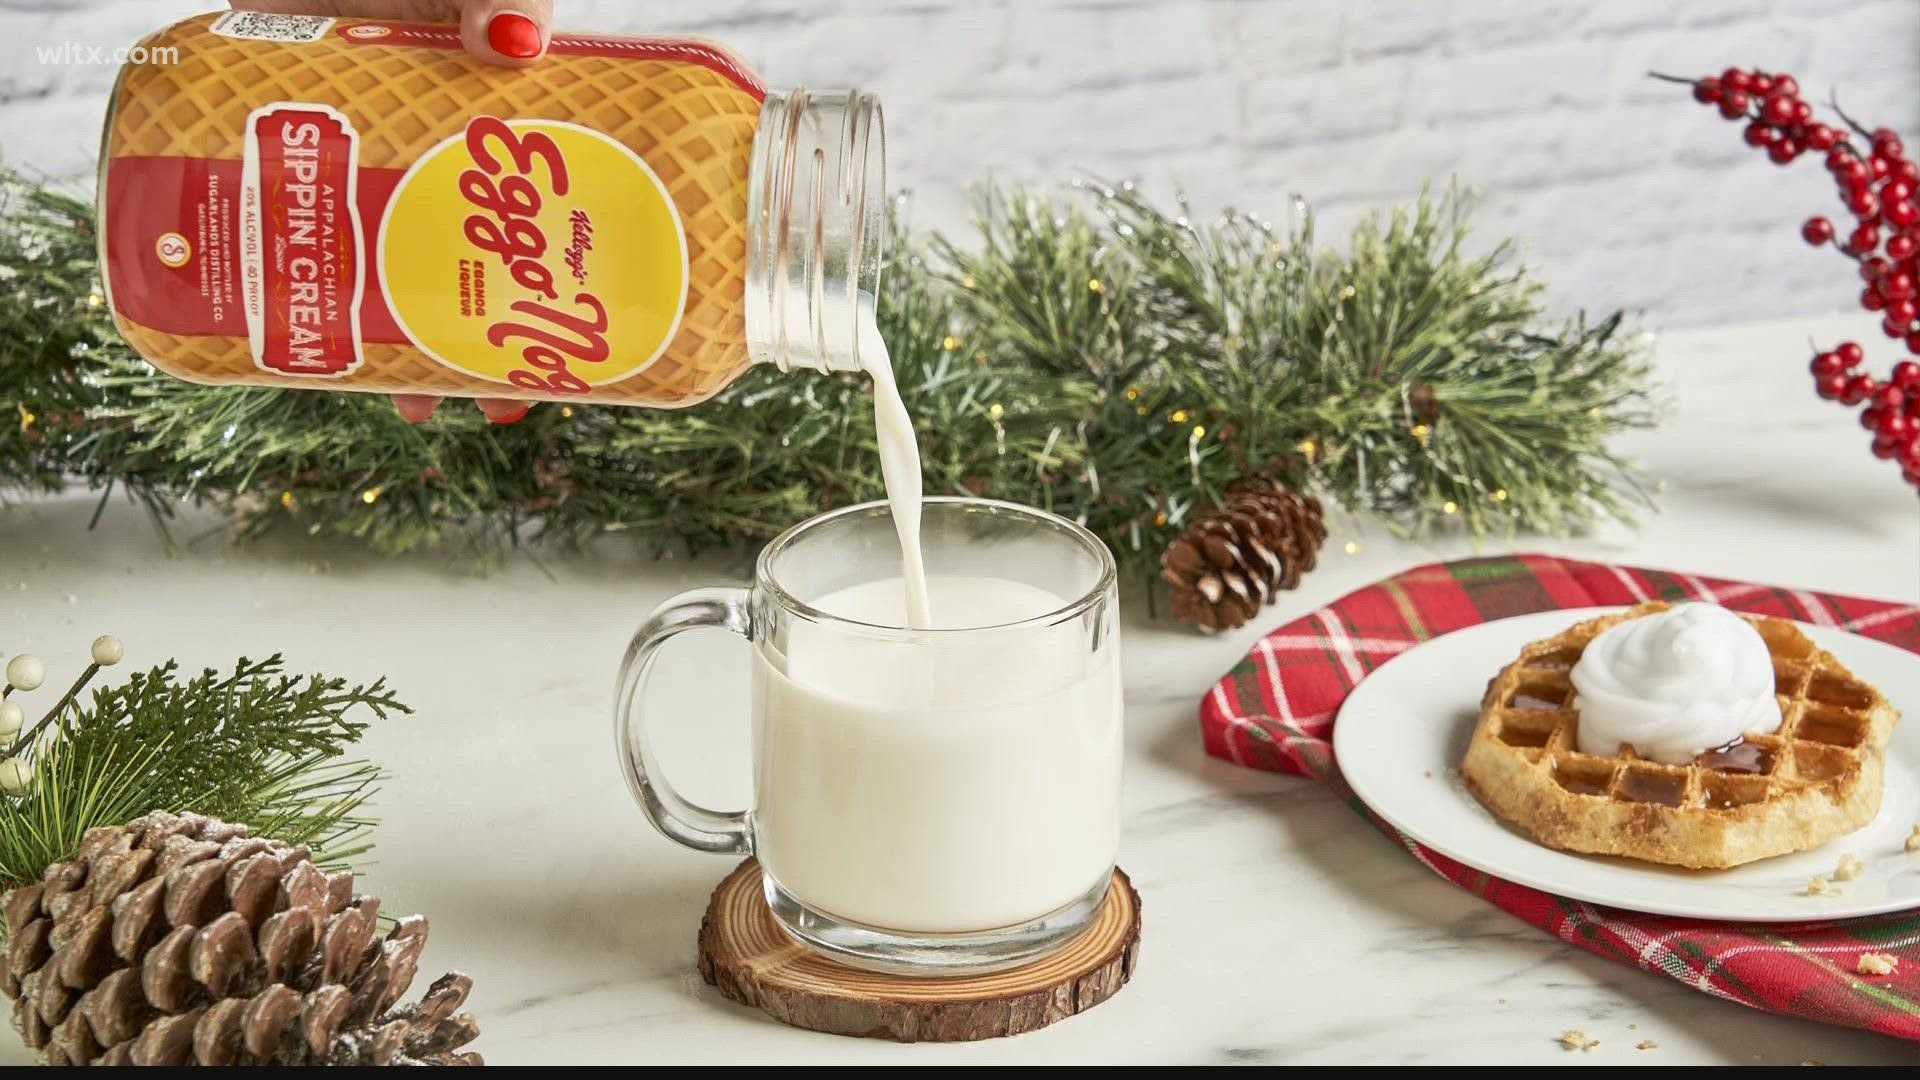 Eggo and Sugarlands Distilling Co. are spreading holiday cheer this season with Eggo Nog Appalachian Sippin’ Cream, an Eggo-inspired eggnog liqueur.